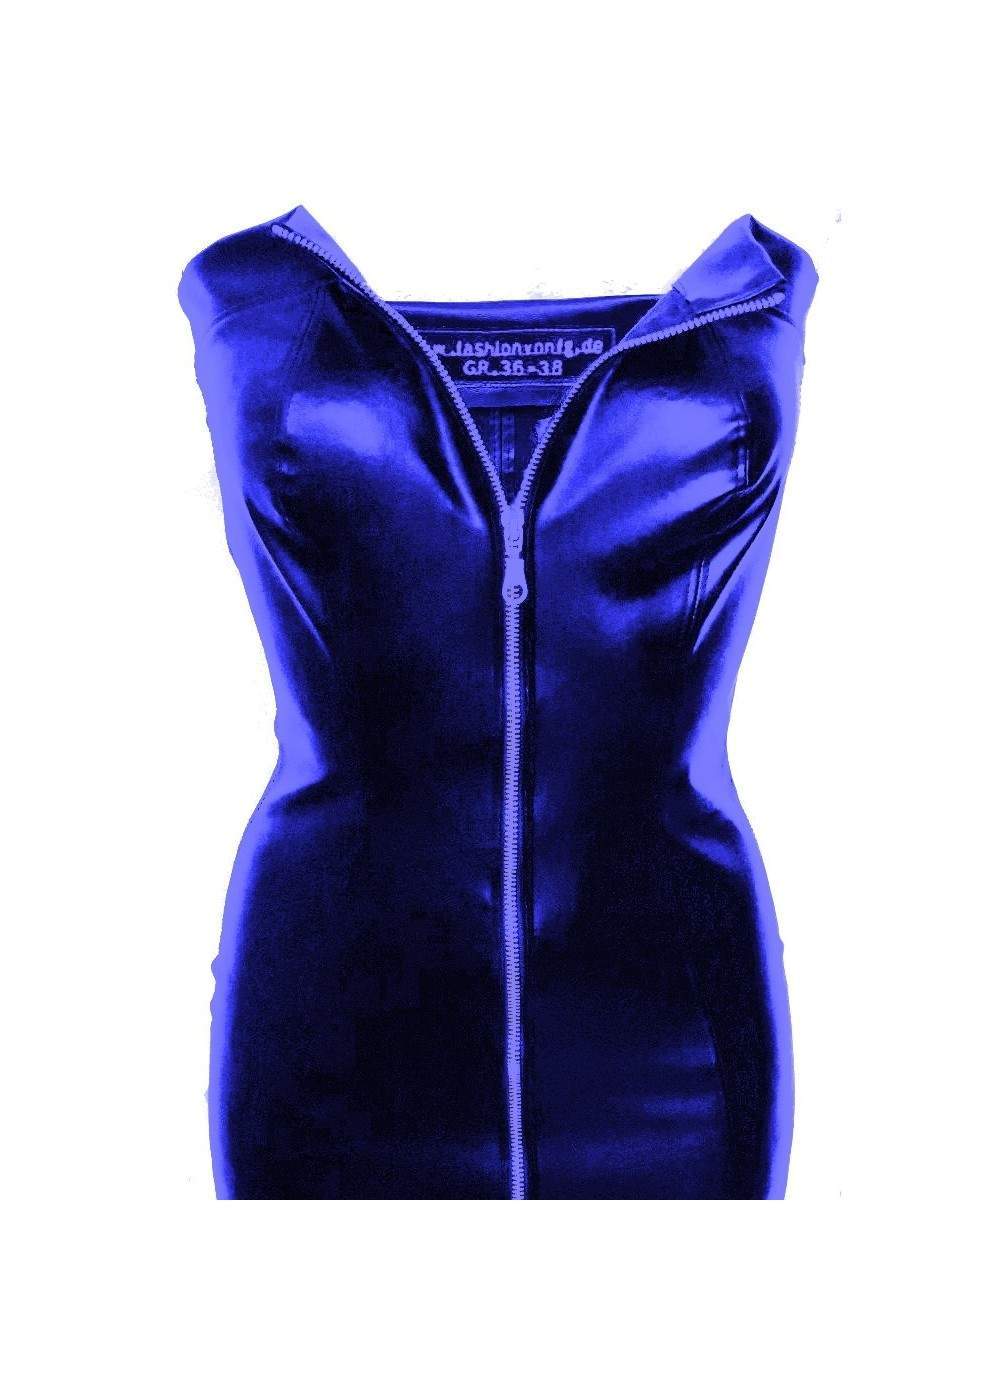 Leather dress blue imitation leather